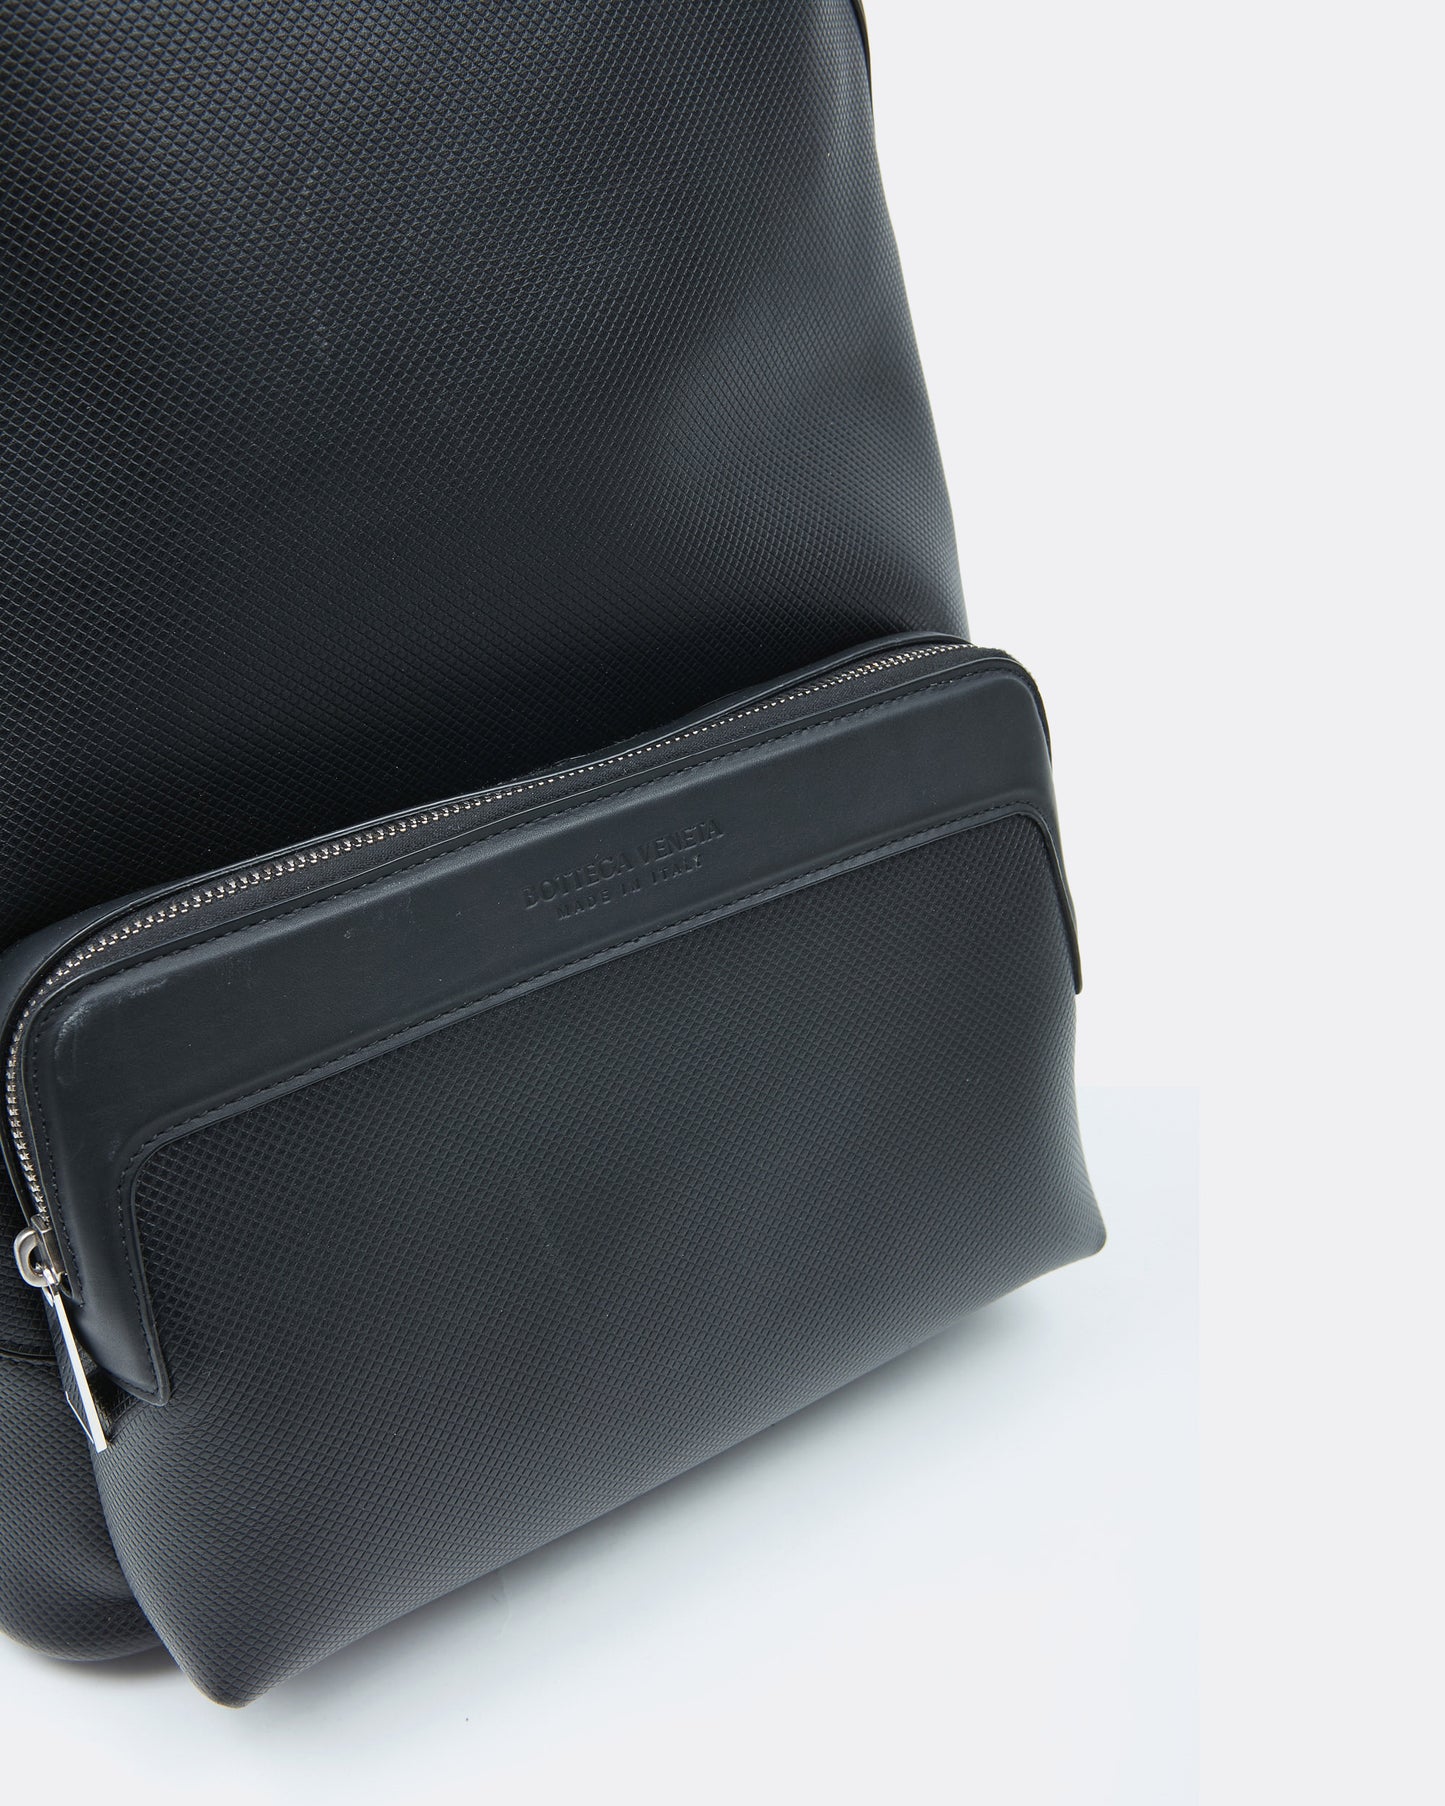 Bottega Veneta Black Leather Quilted Backpack